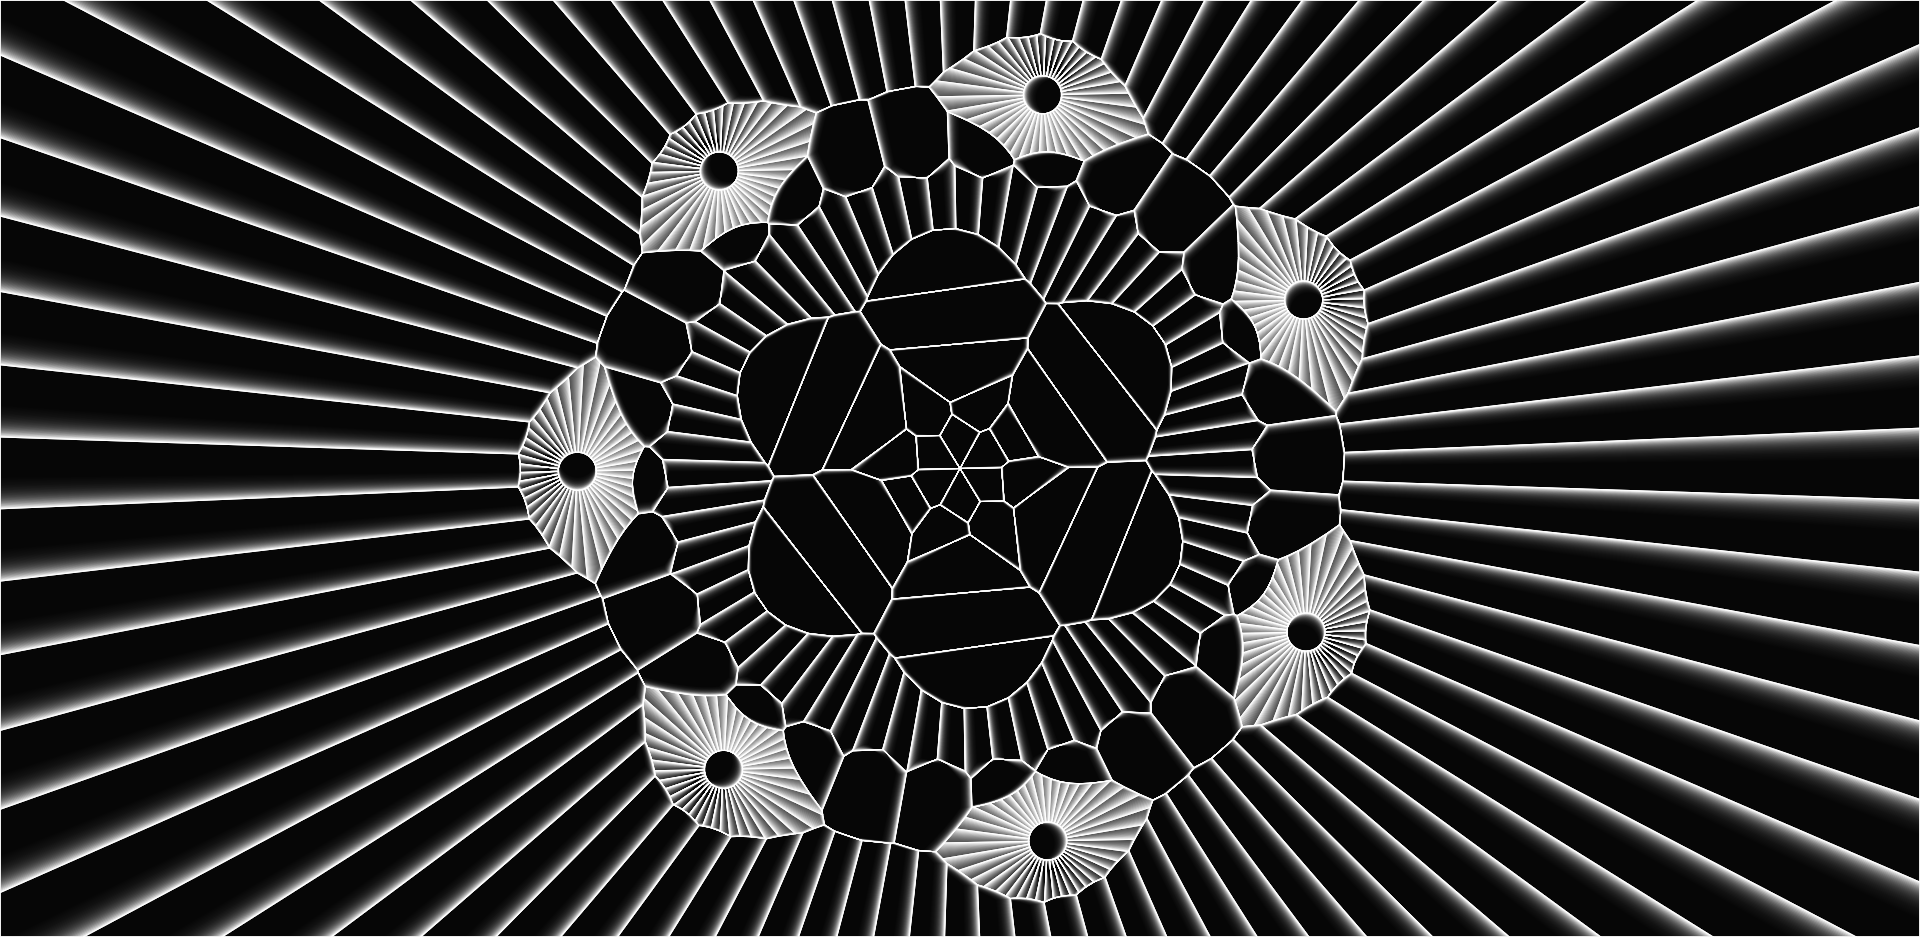 Radial Voronoi diagram experiments in JavaScript